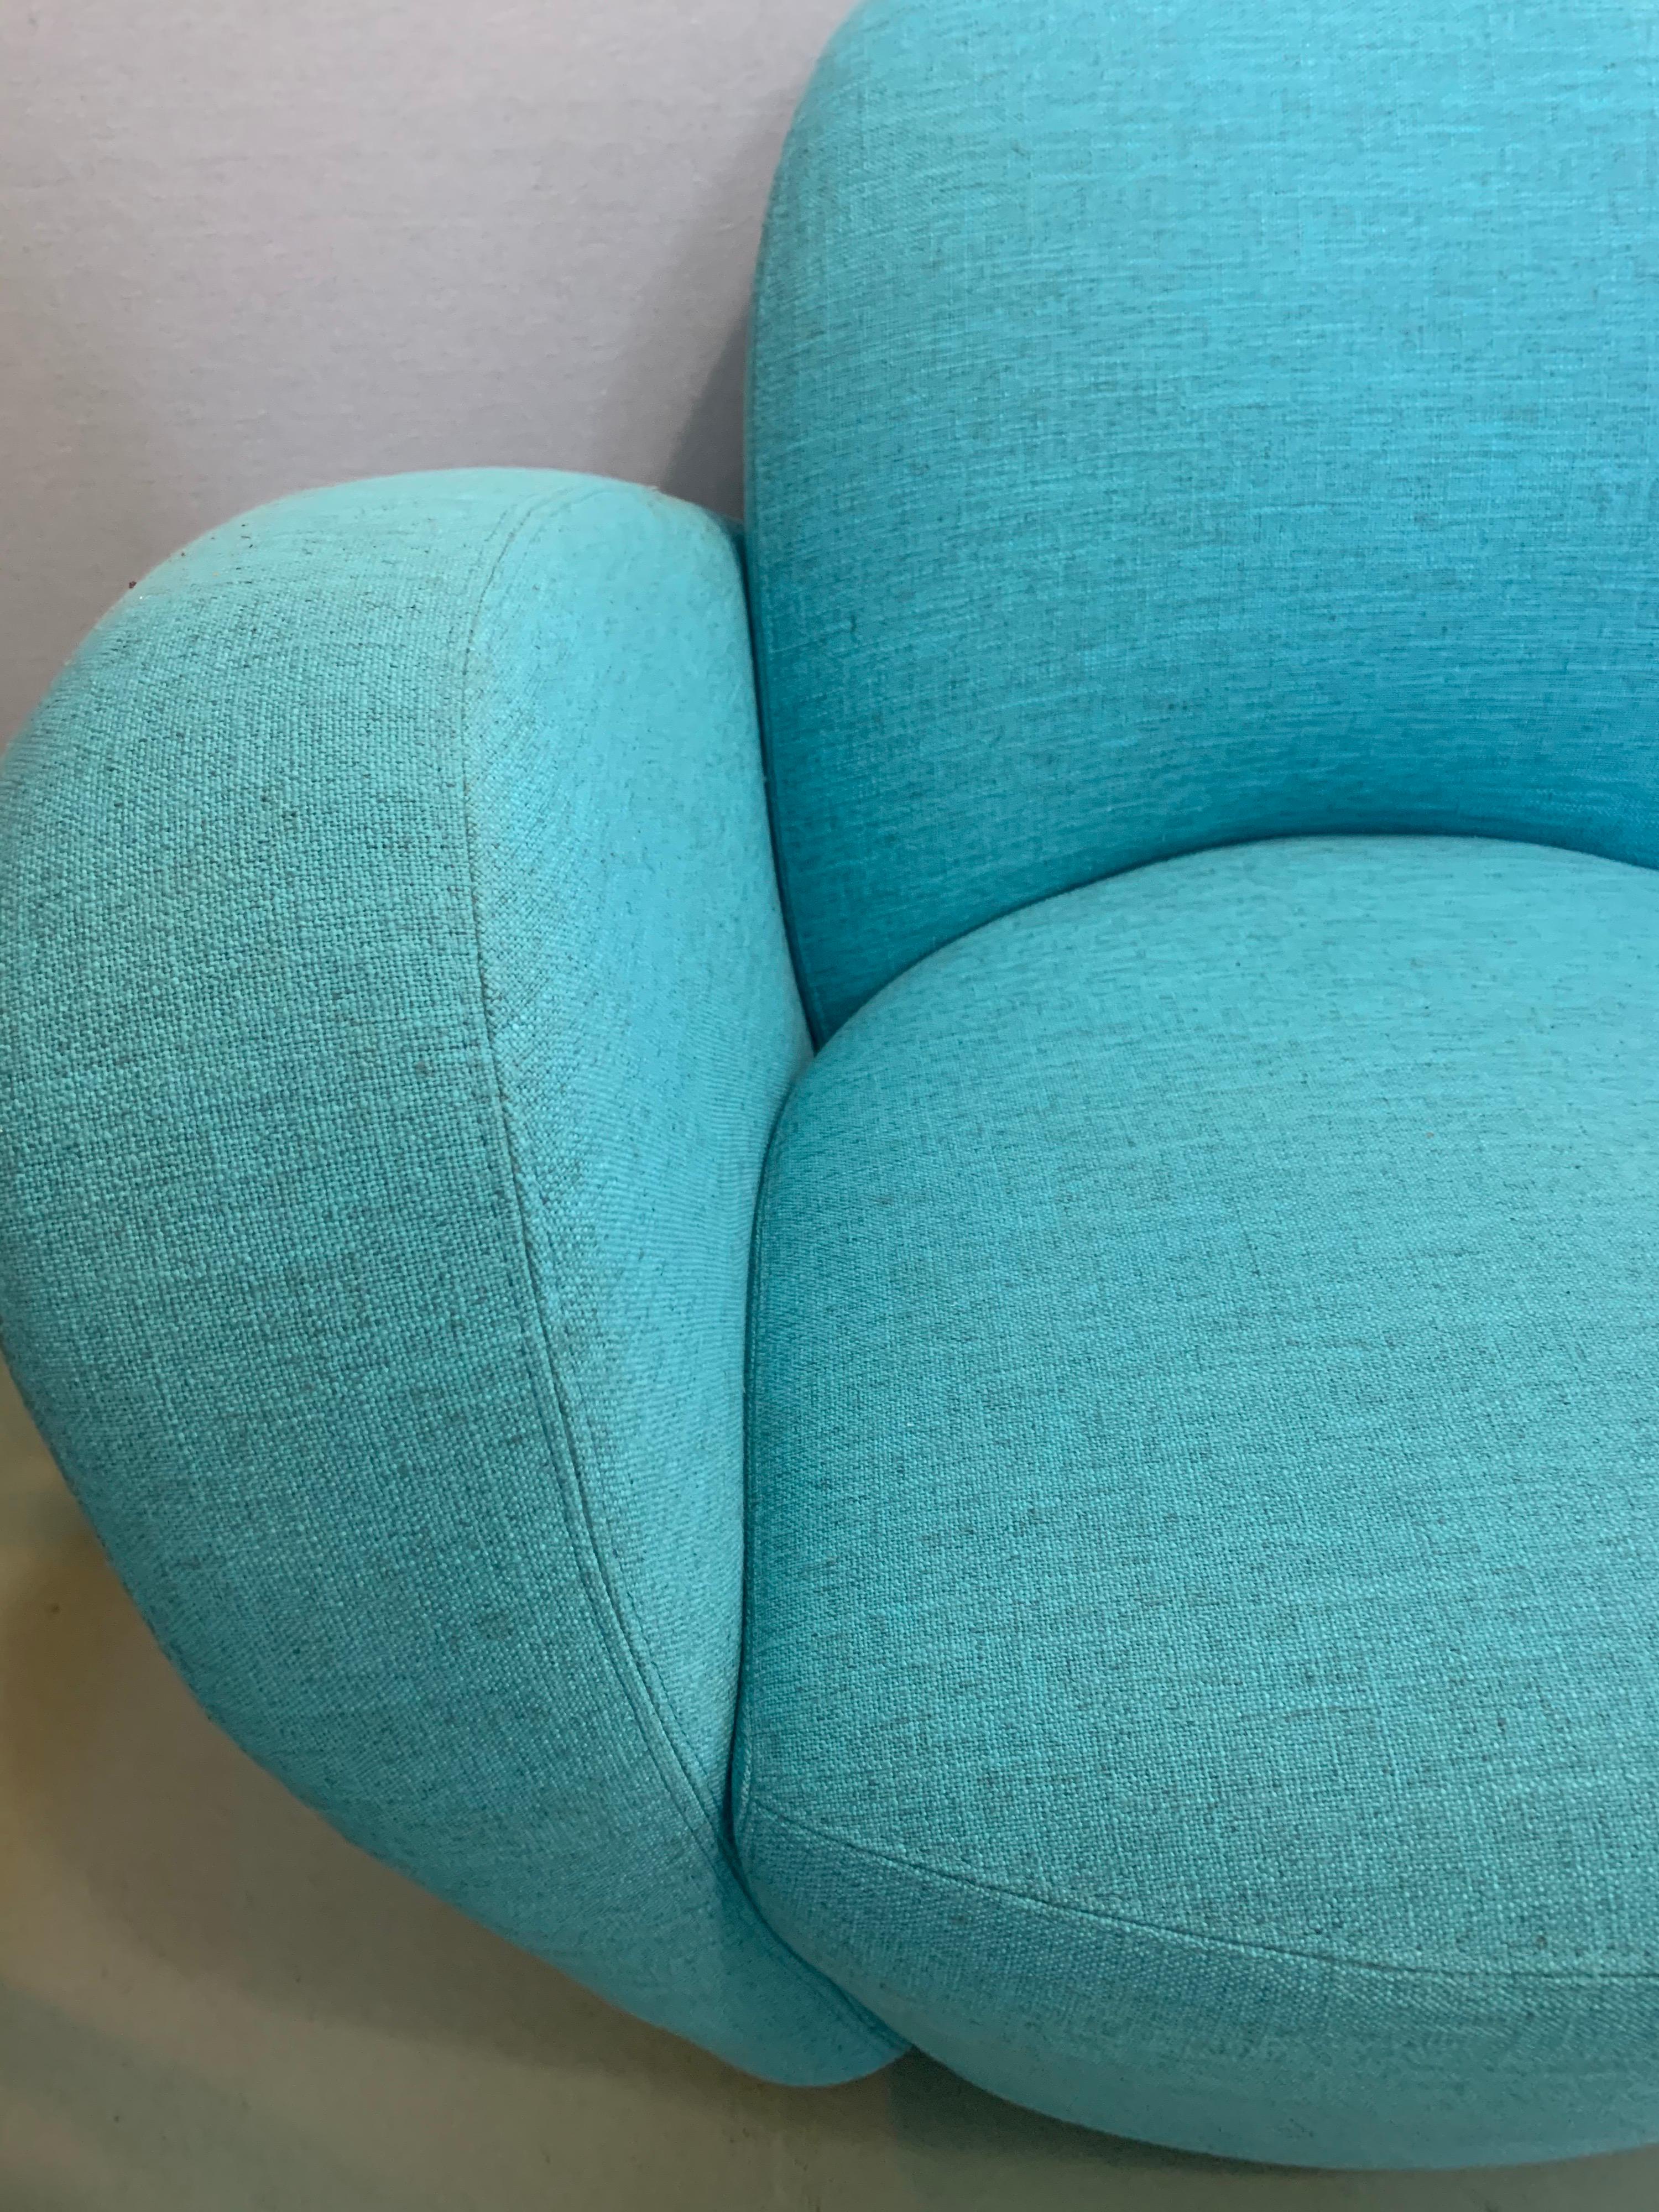 turquoise swivel chair